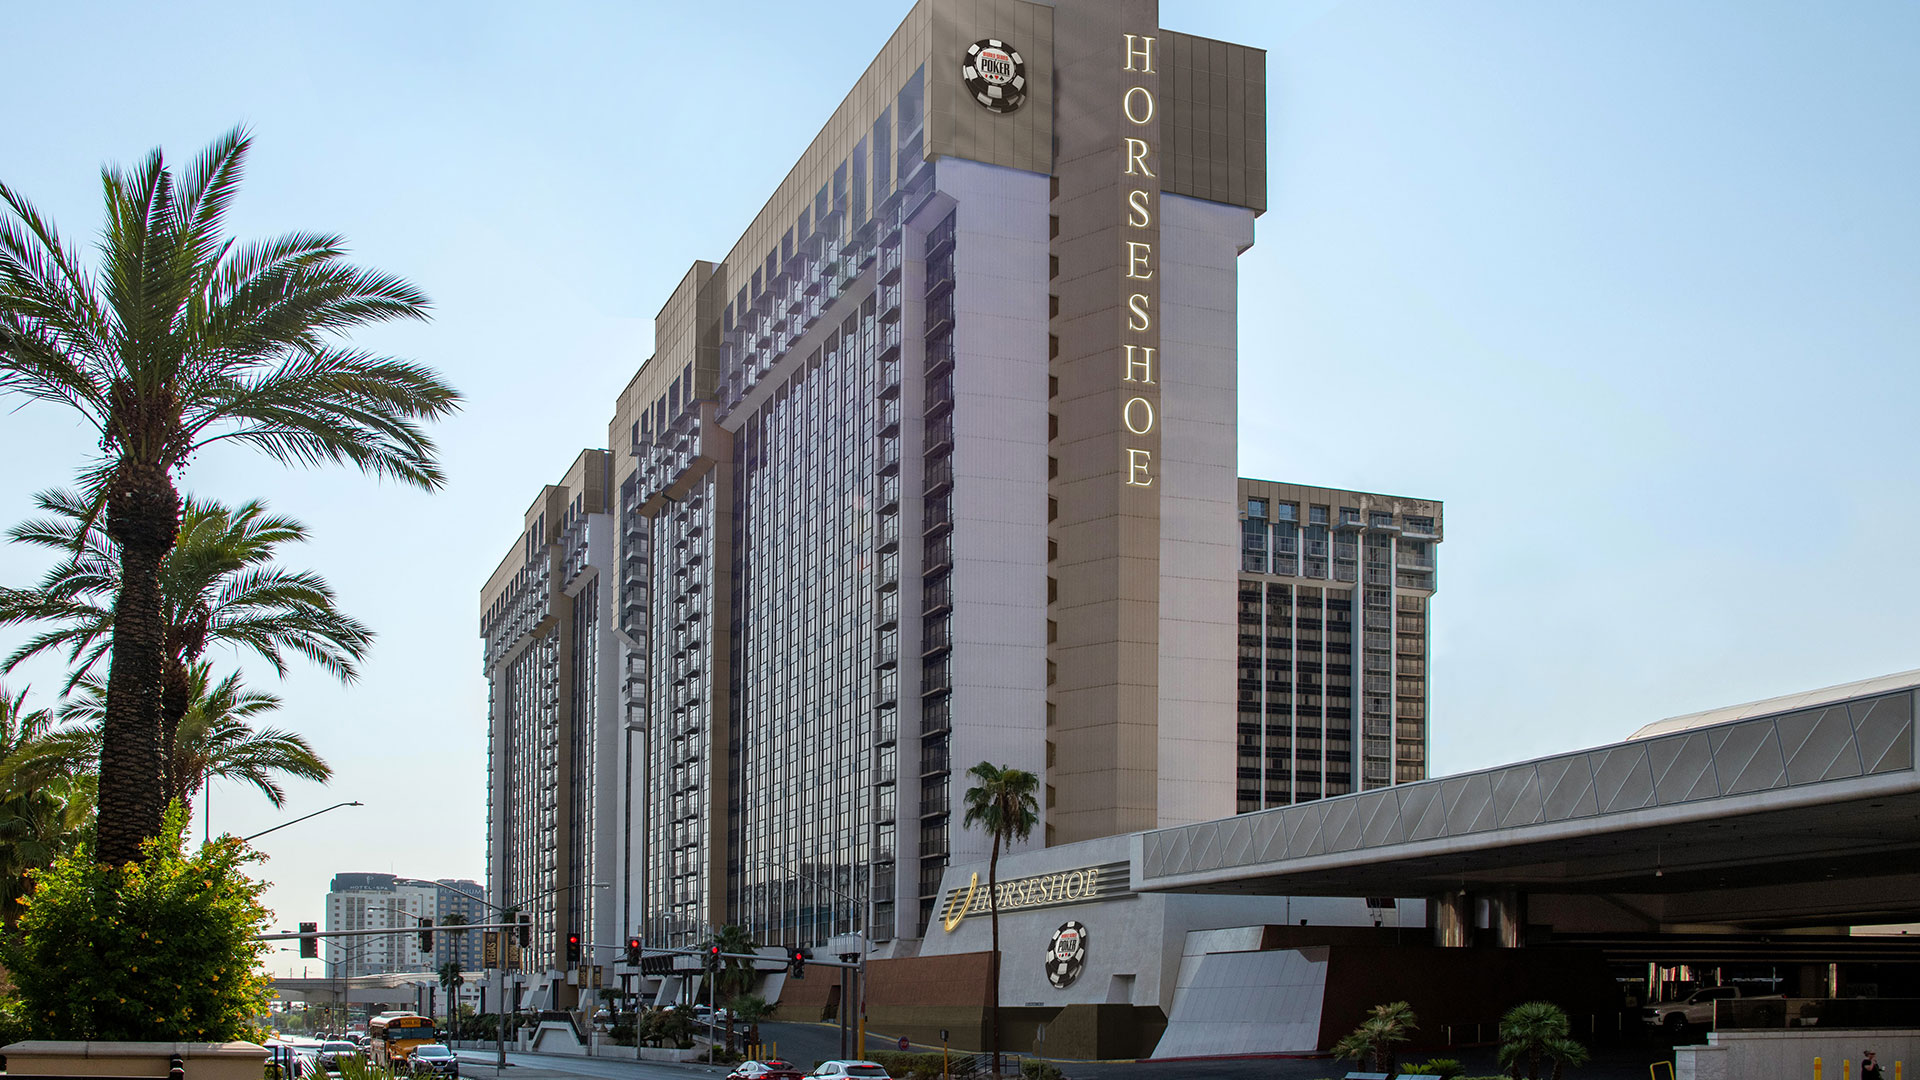 8 Best Boutique Hotels in Las Vegas